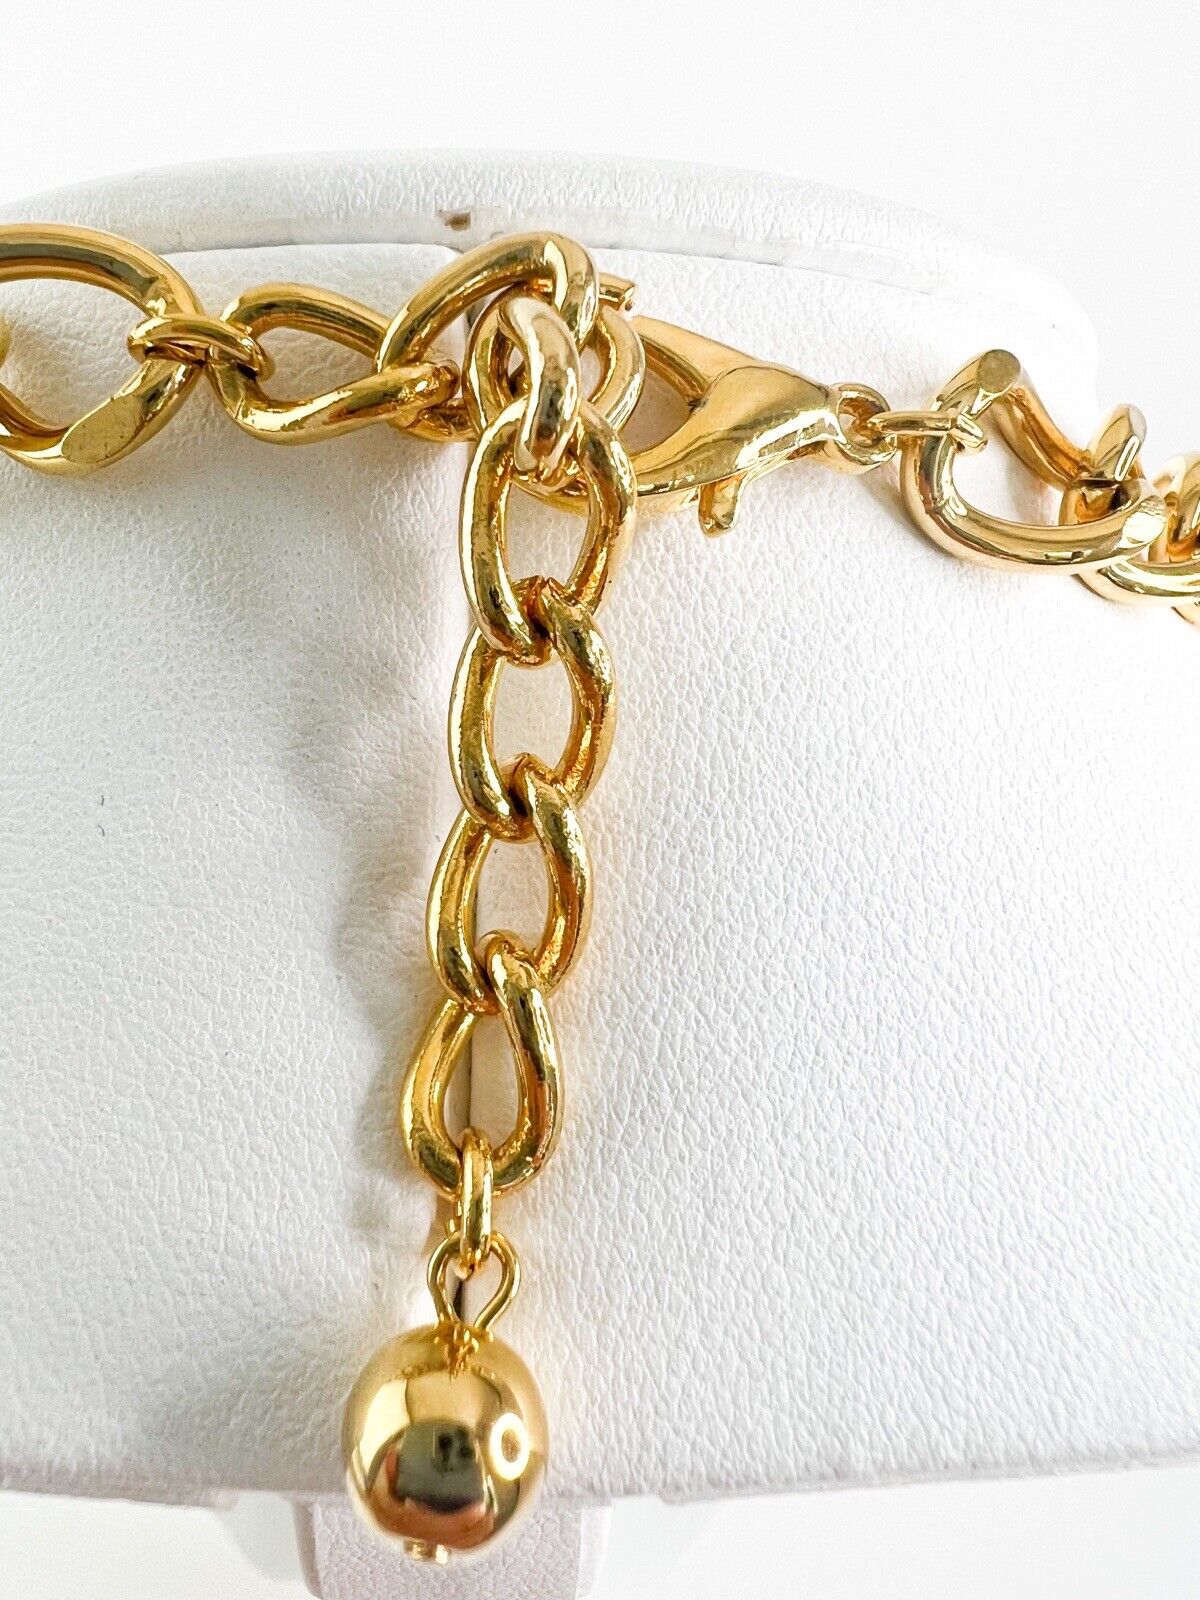 Christian Dior Vintage Chain Necklace POISON Charm Necklace